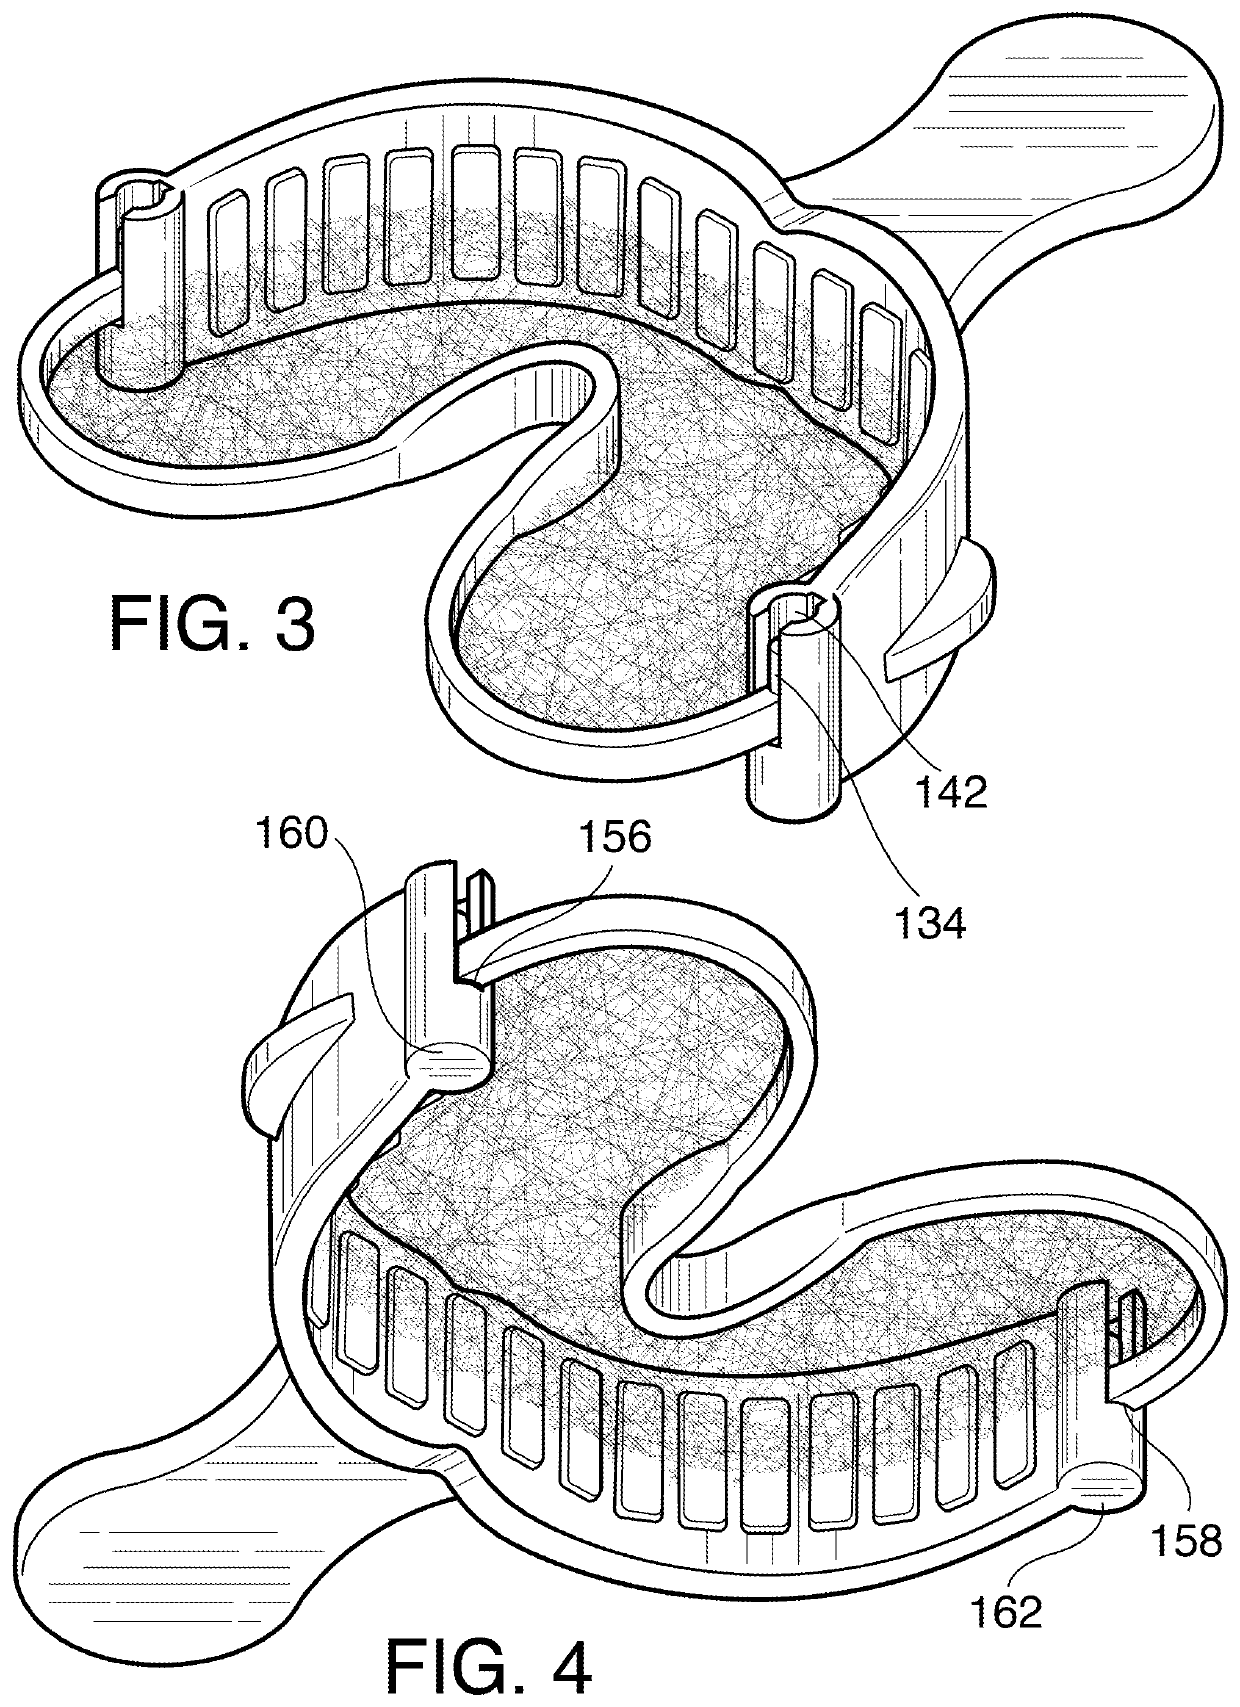 Adjustable dental impression tray with adaptive lock